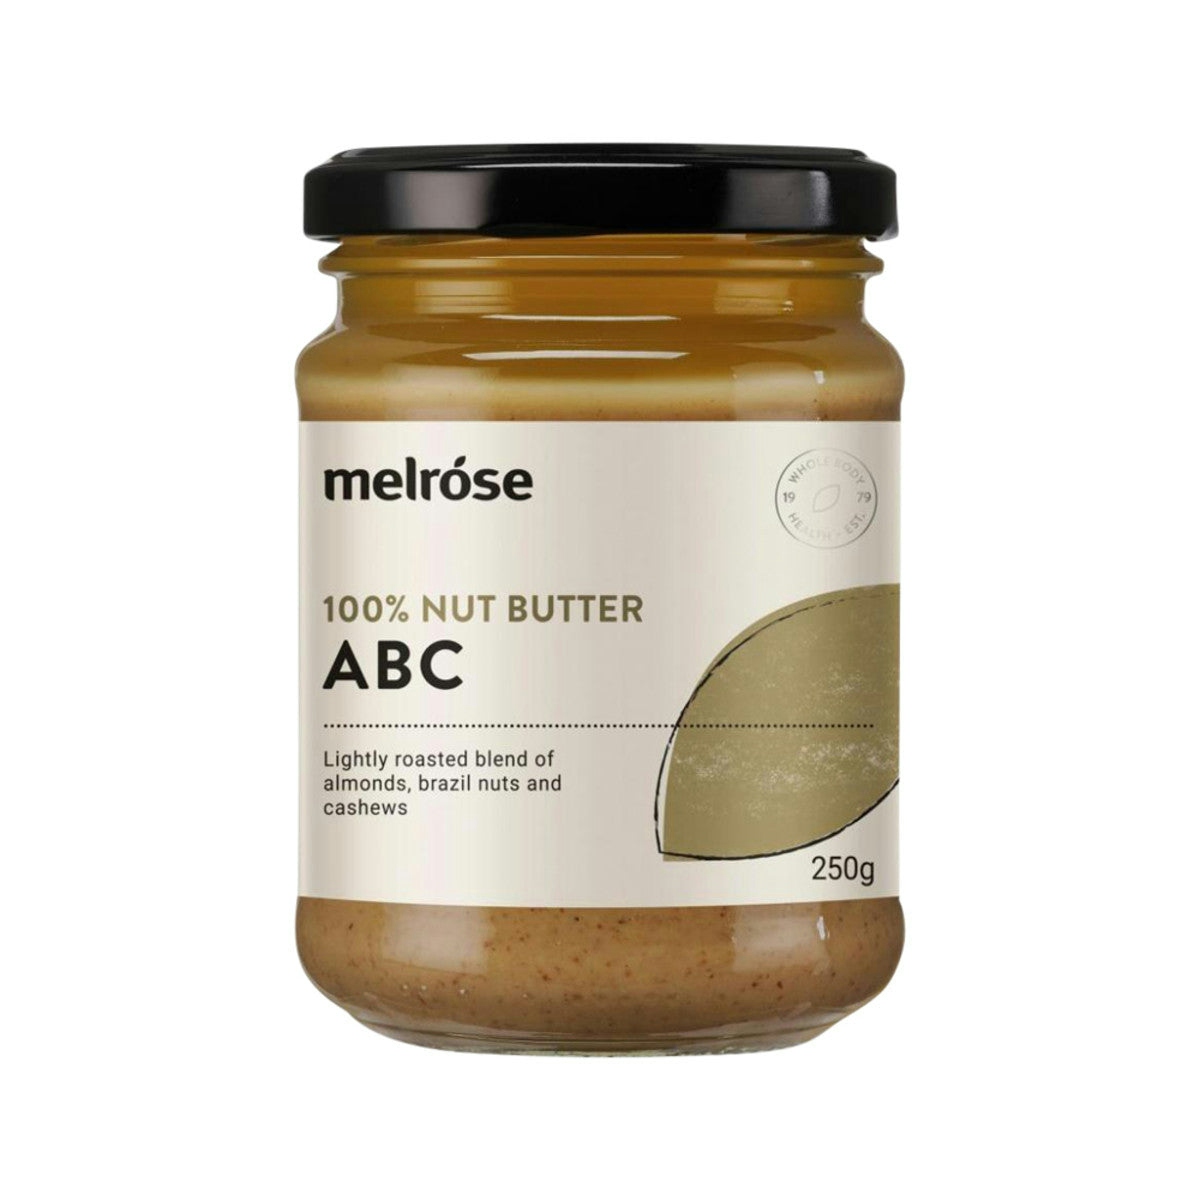 image of Melrose 100% Nut Butter ABC (Almond Brazils & Cashews) 250g on white background